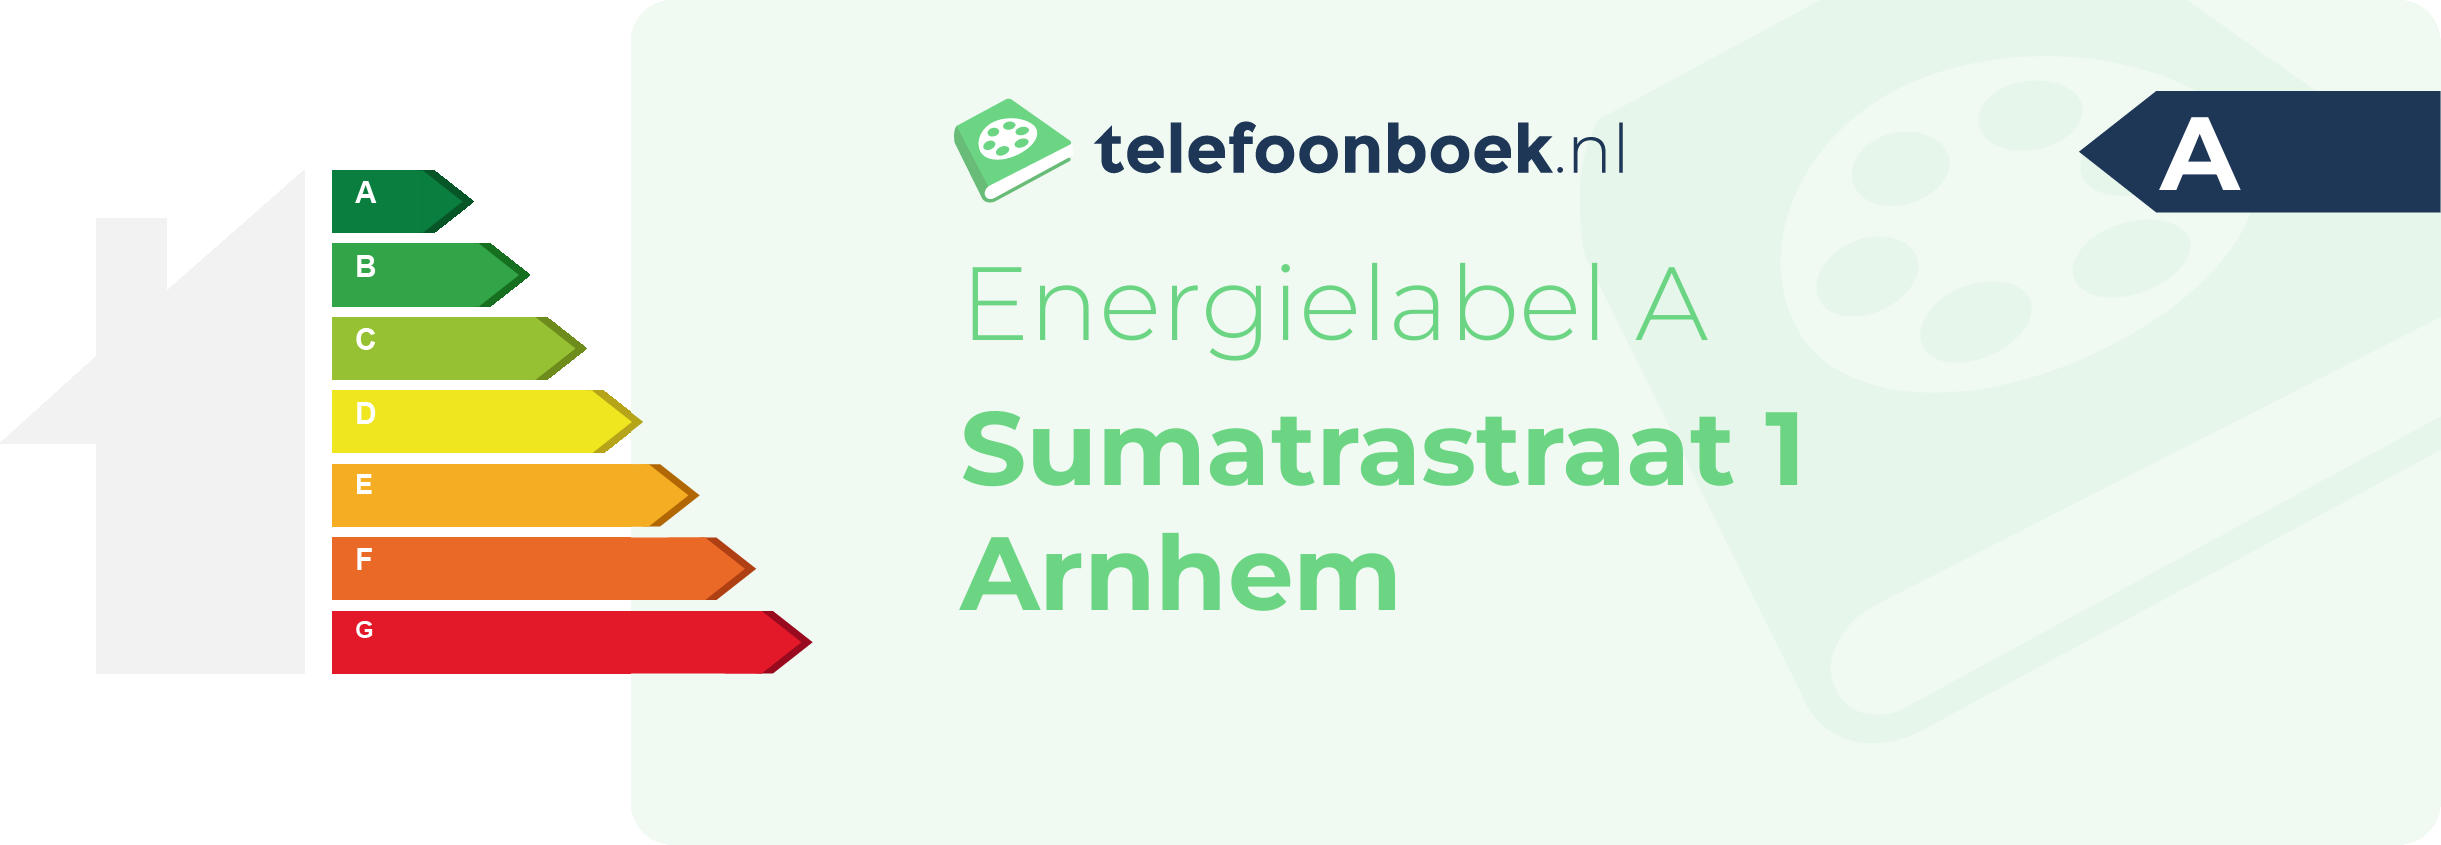 Energielabel Sumatrastraat 1 Arnhem